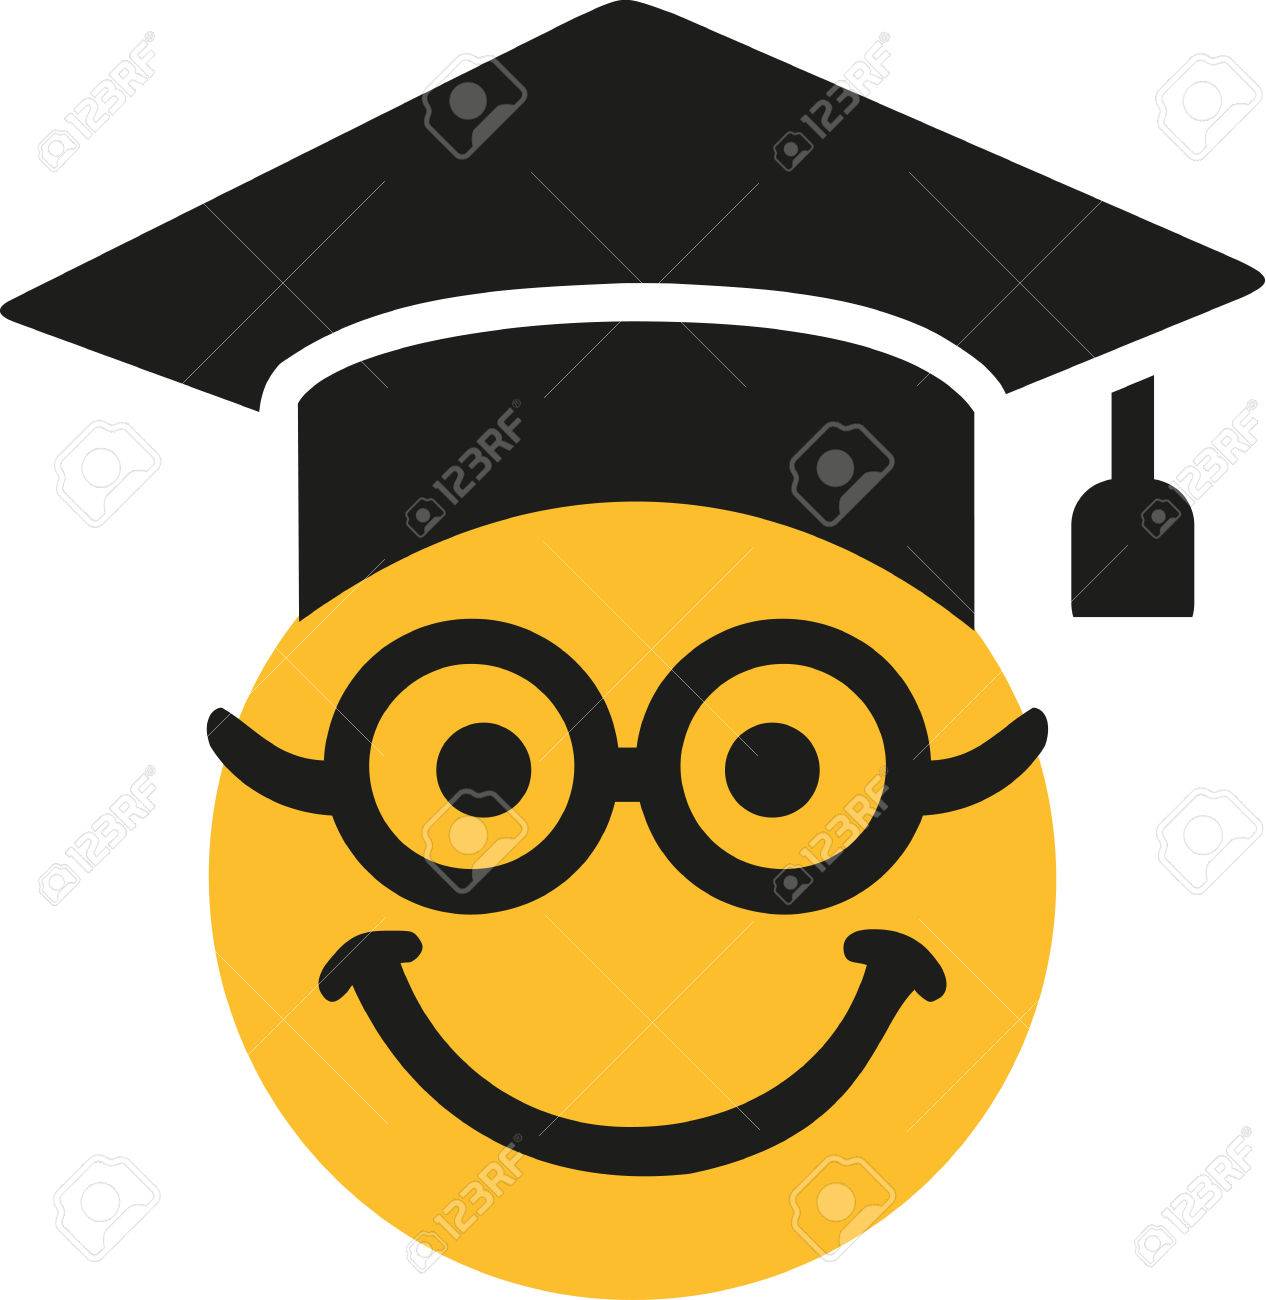 Smiley clipart graduation.